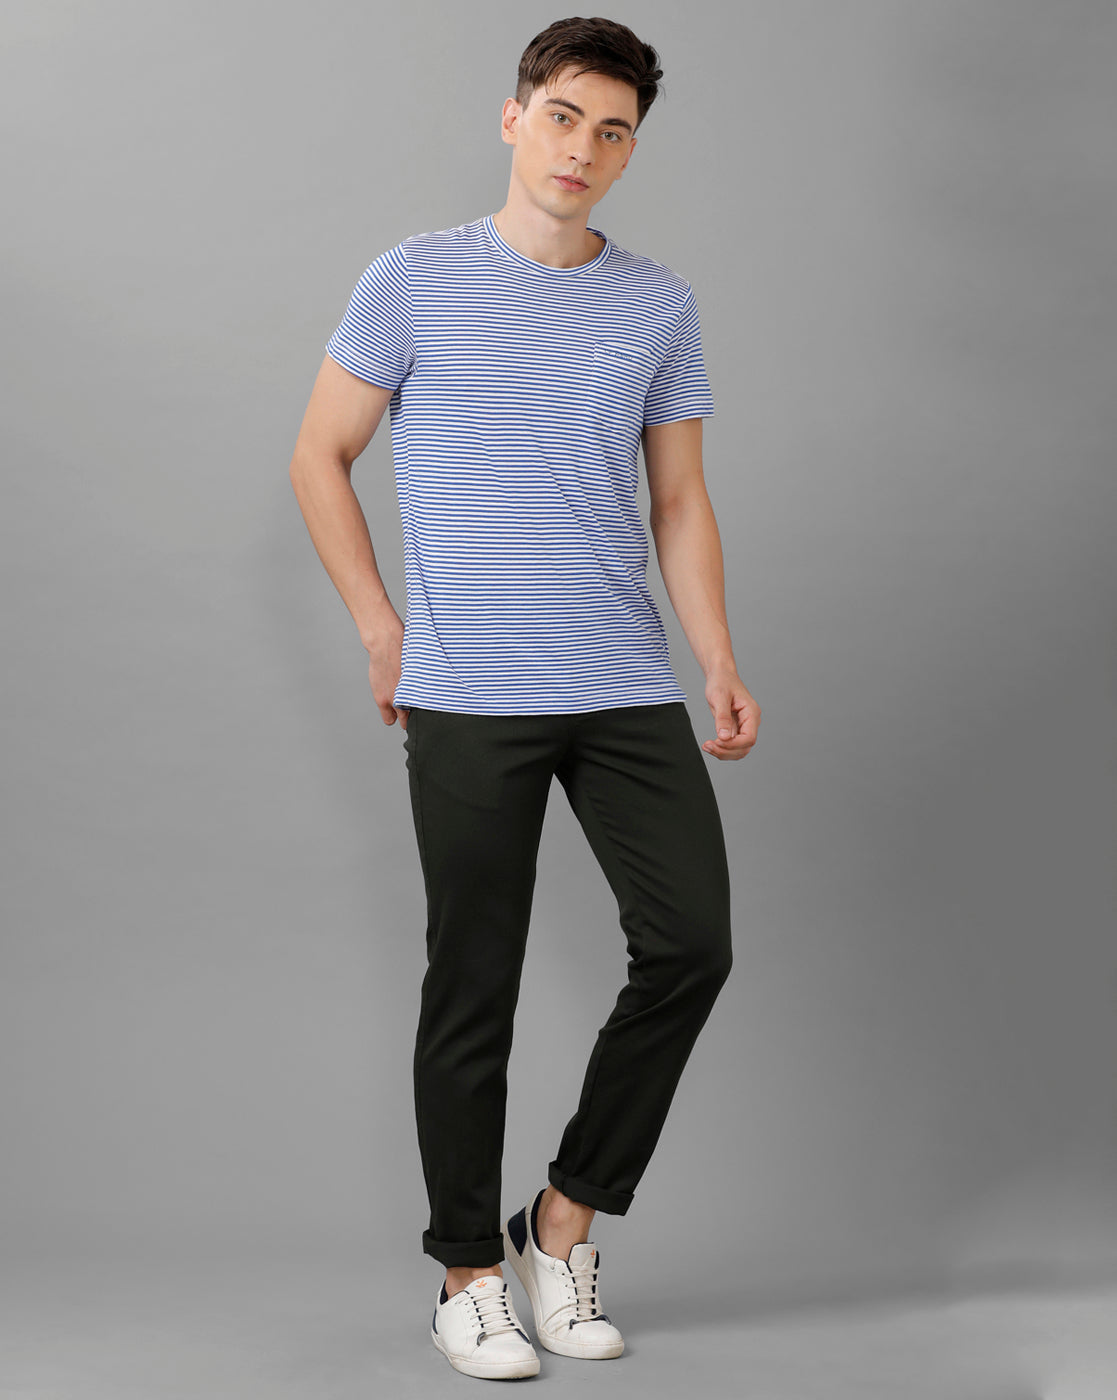 CP BRO Men's Cotton Striped Half Sleeve Slim Fit Round Neck Blue Color T-Shirt | Brcn 498